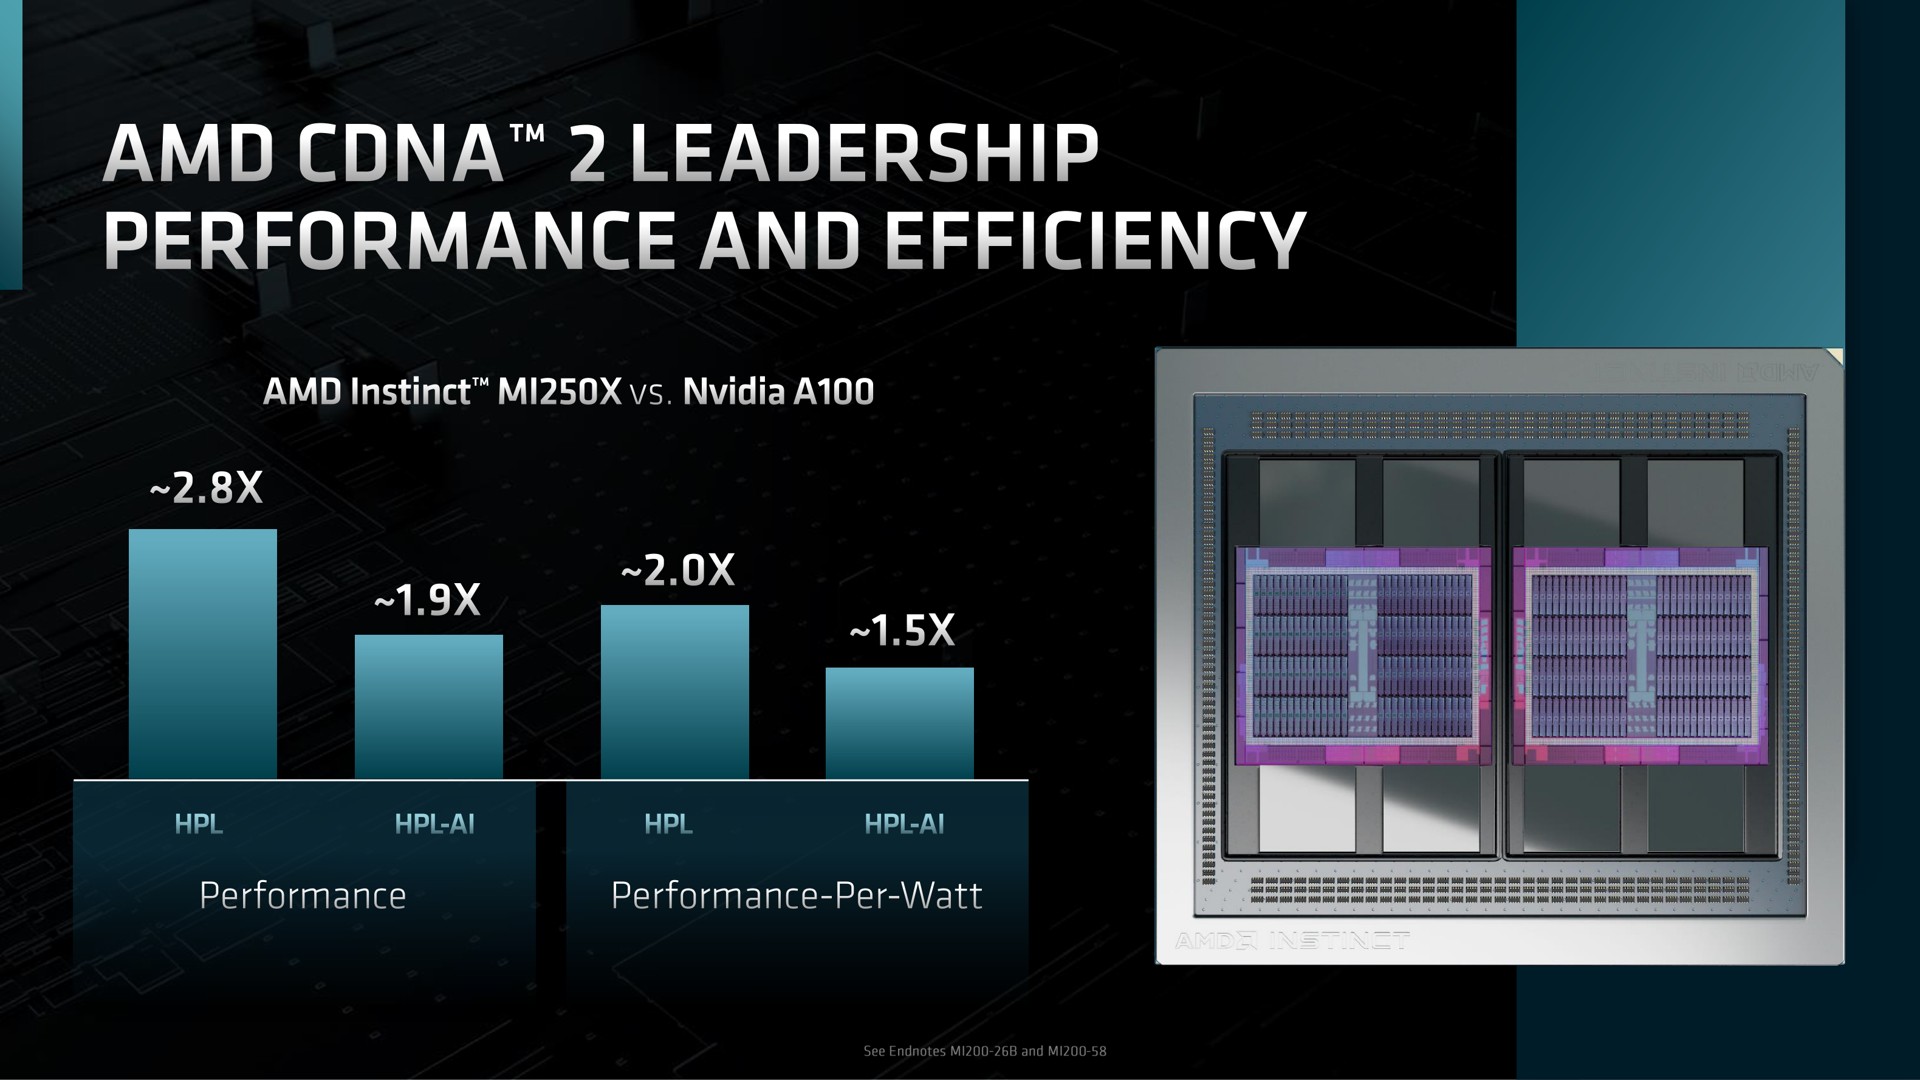 leadership performance and efficiency it | AMD